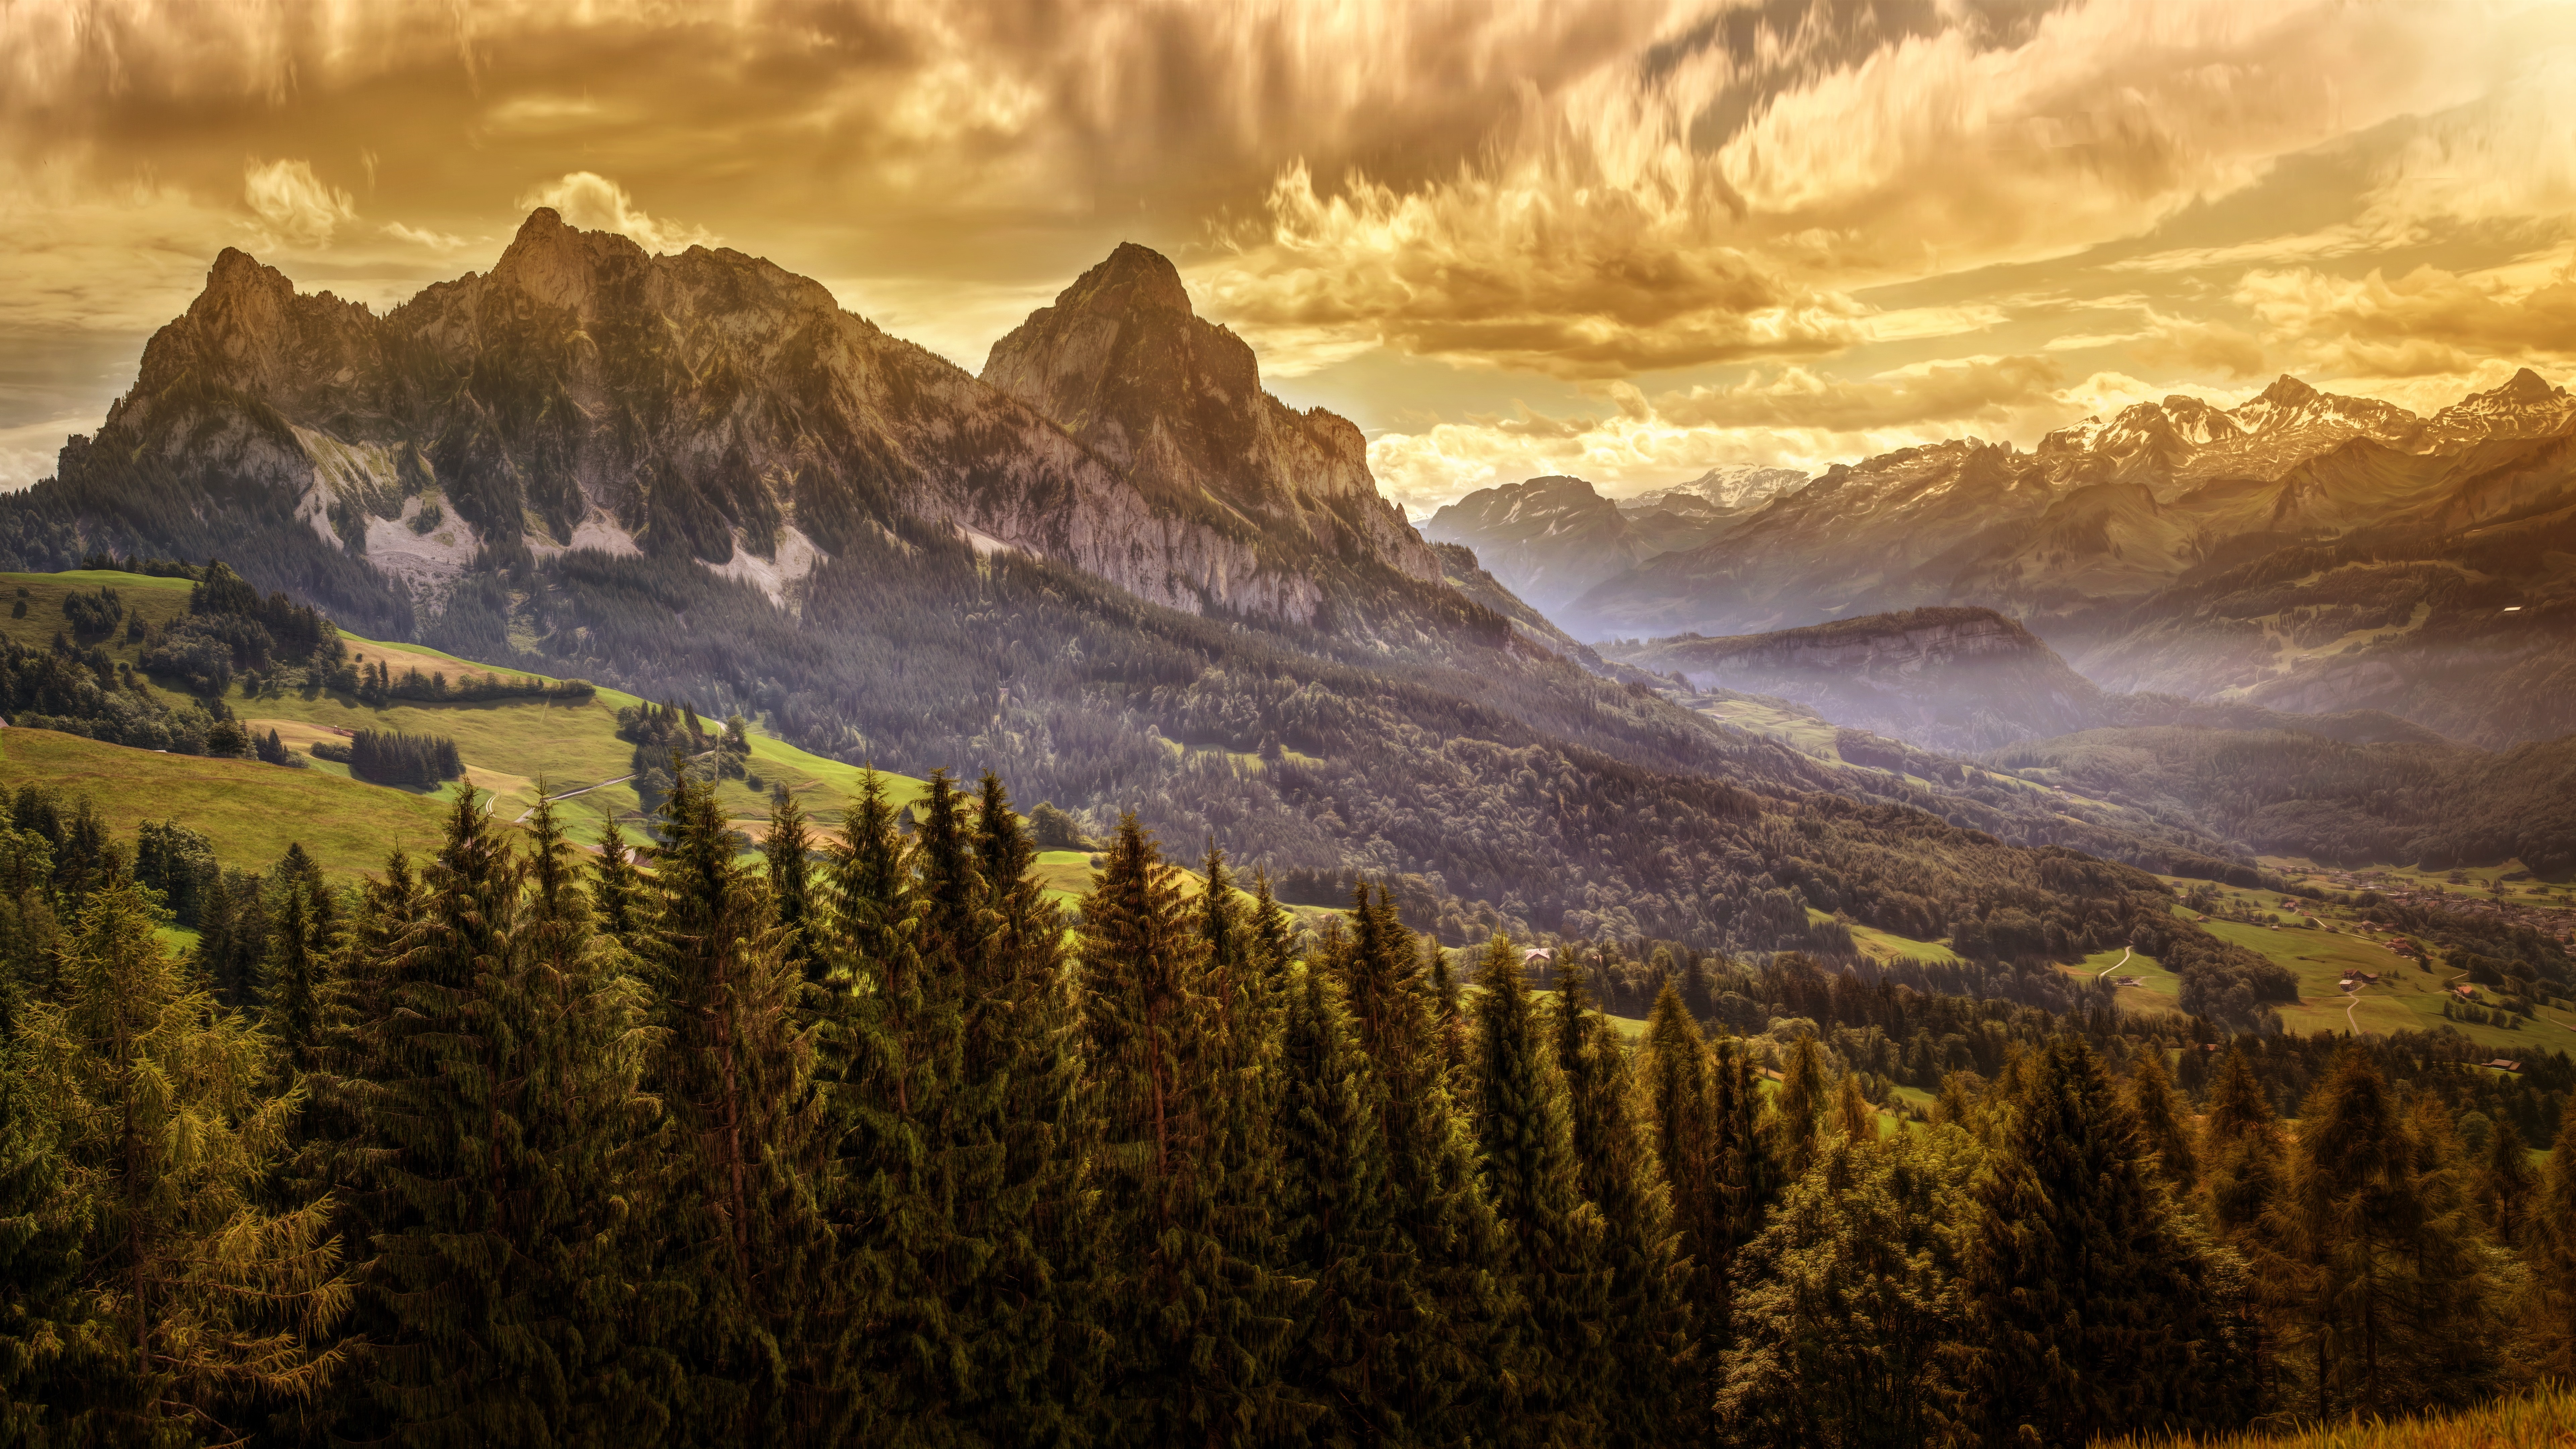 Wallpaper Mountains, trees, clouds, dusk, nature landscape 7680x4320 UHD 8K Picture, Image